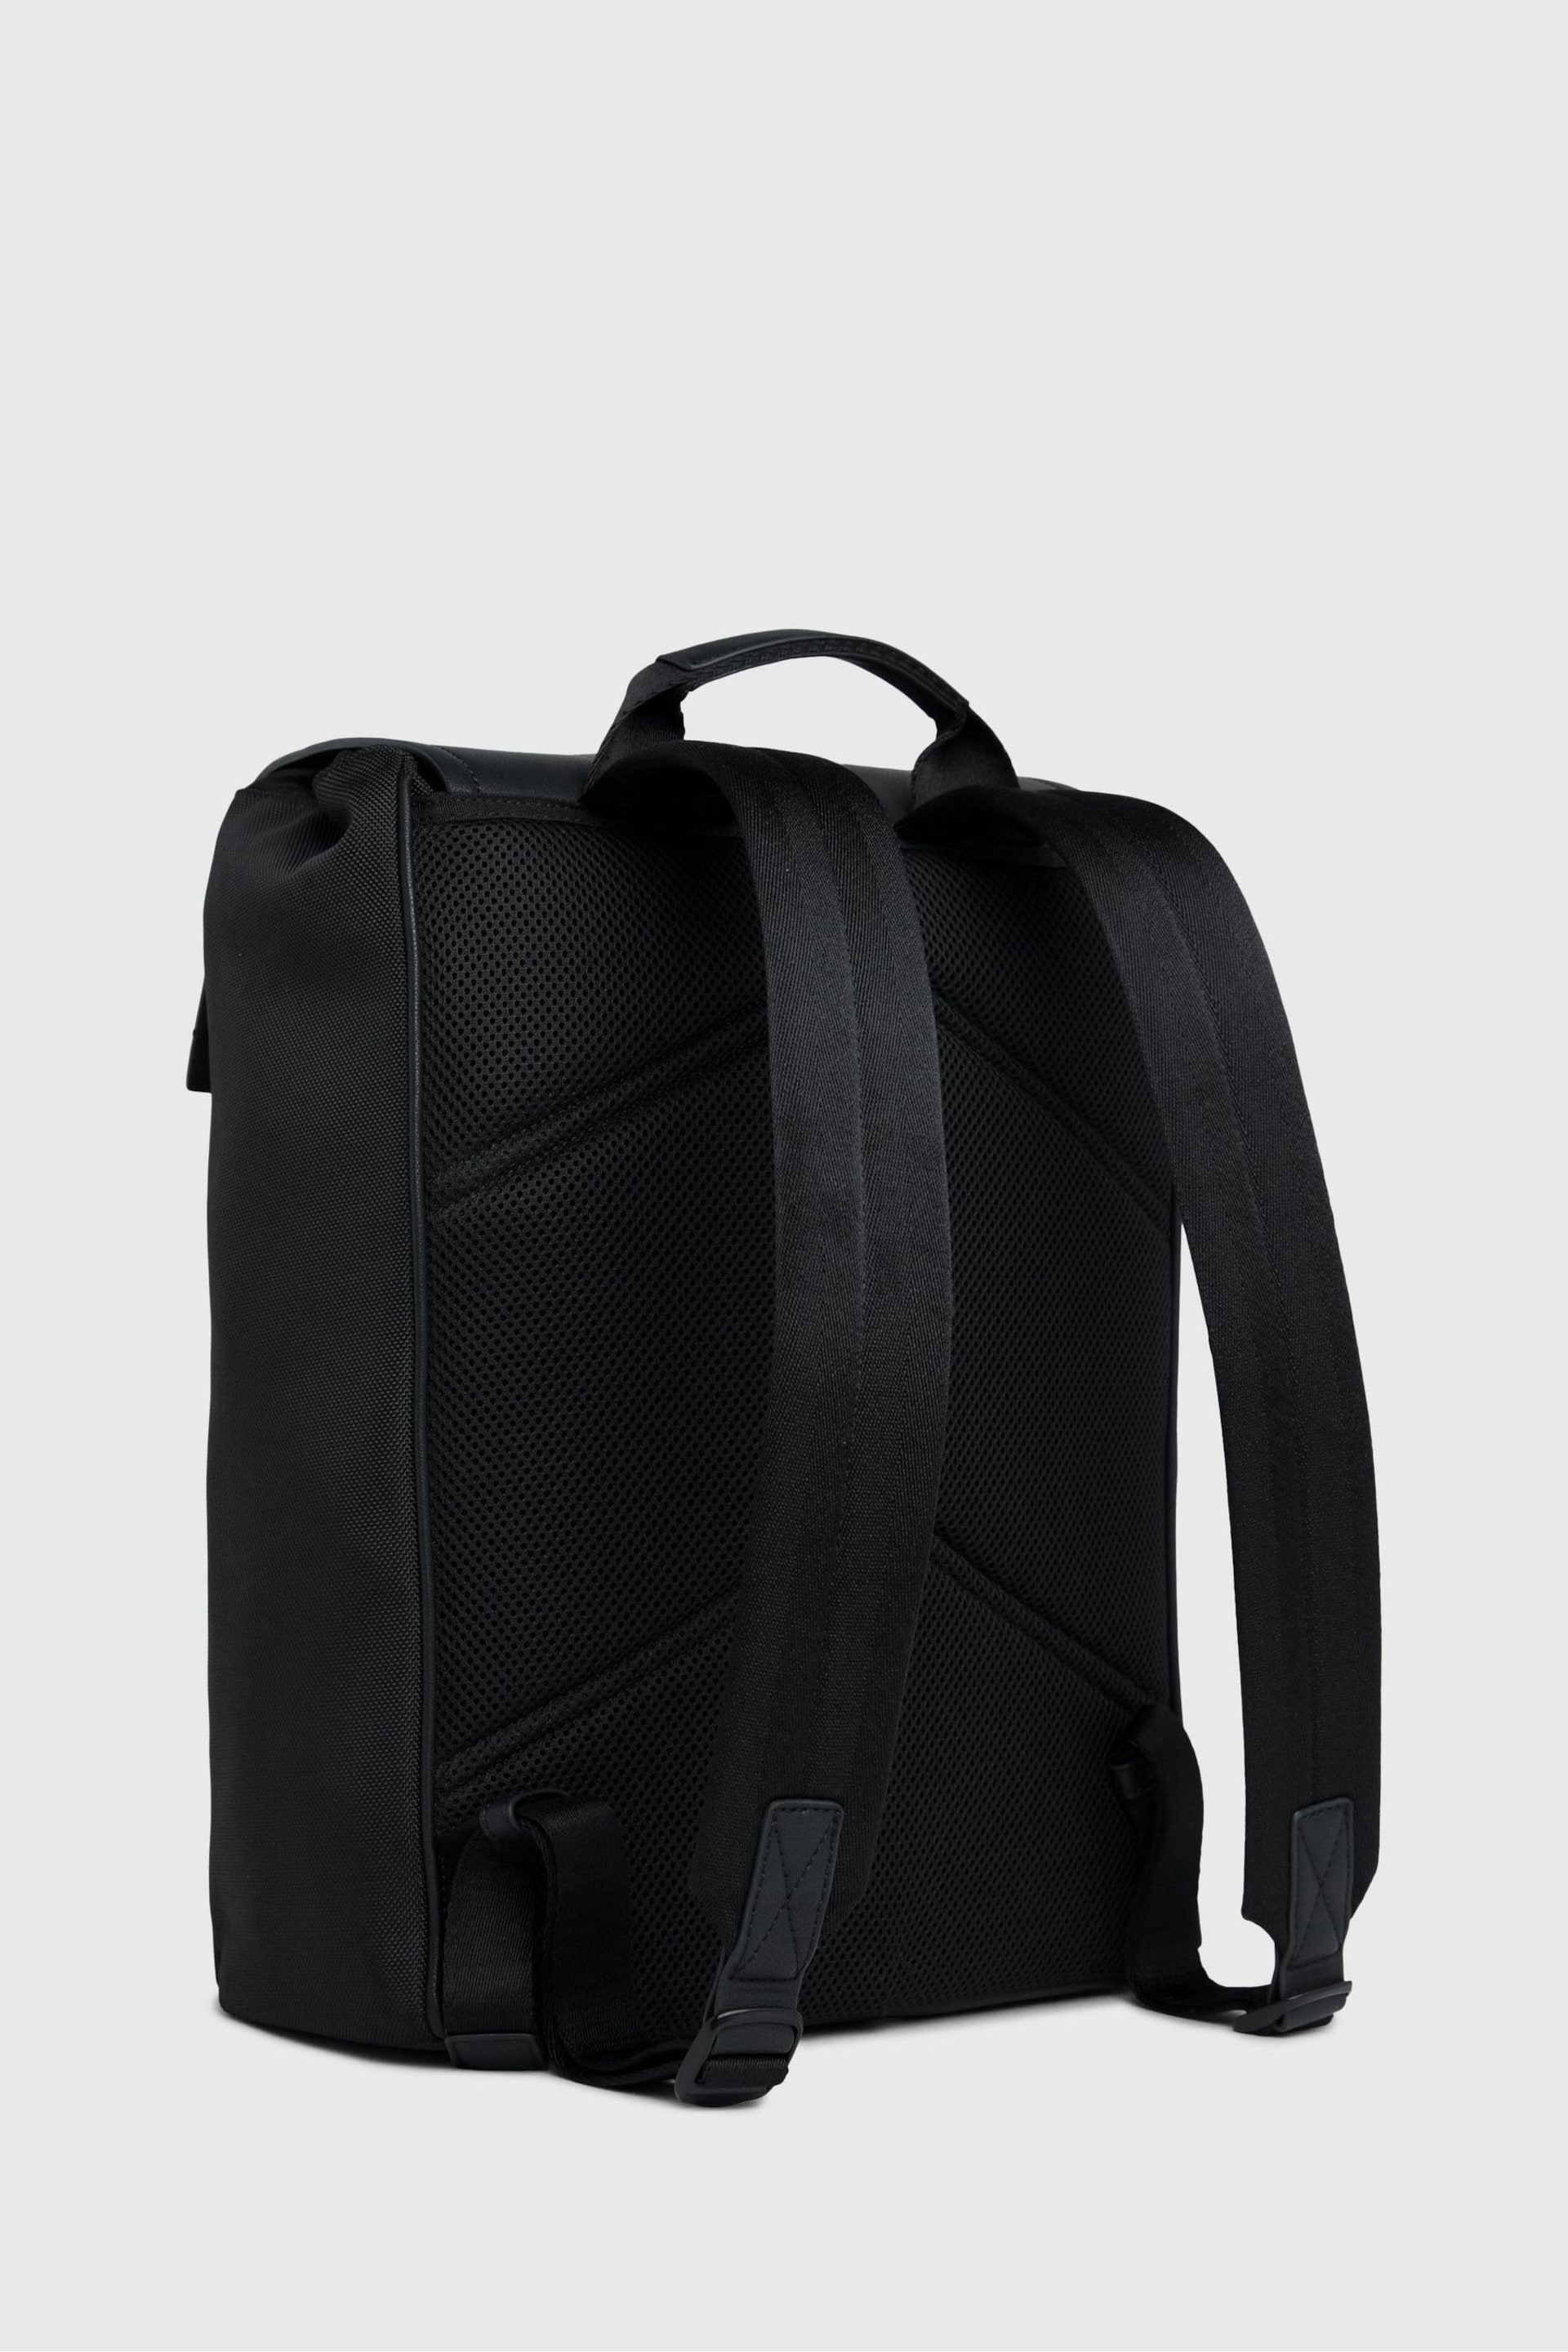 Calvin Klein Black Elevated Flap Backpack - Image 4 of 5